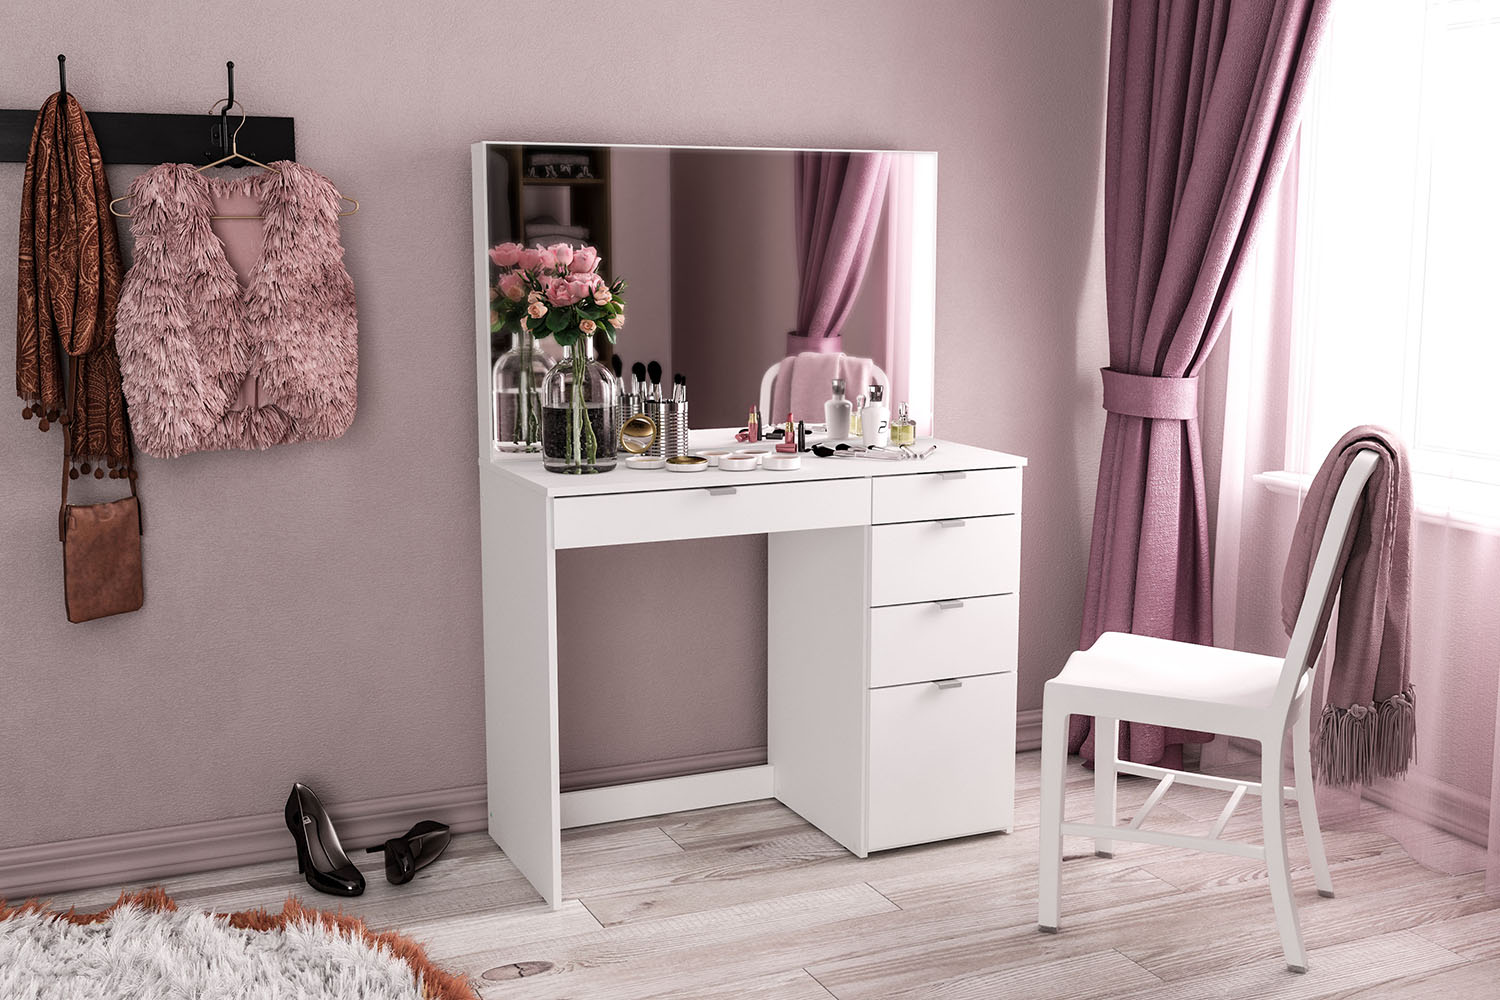 Polifurniture Linden Modern Bedroom Makeup Vanity Table, White Finish - image 4 of 14